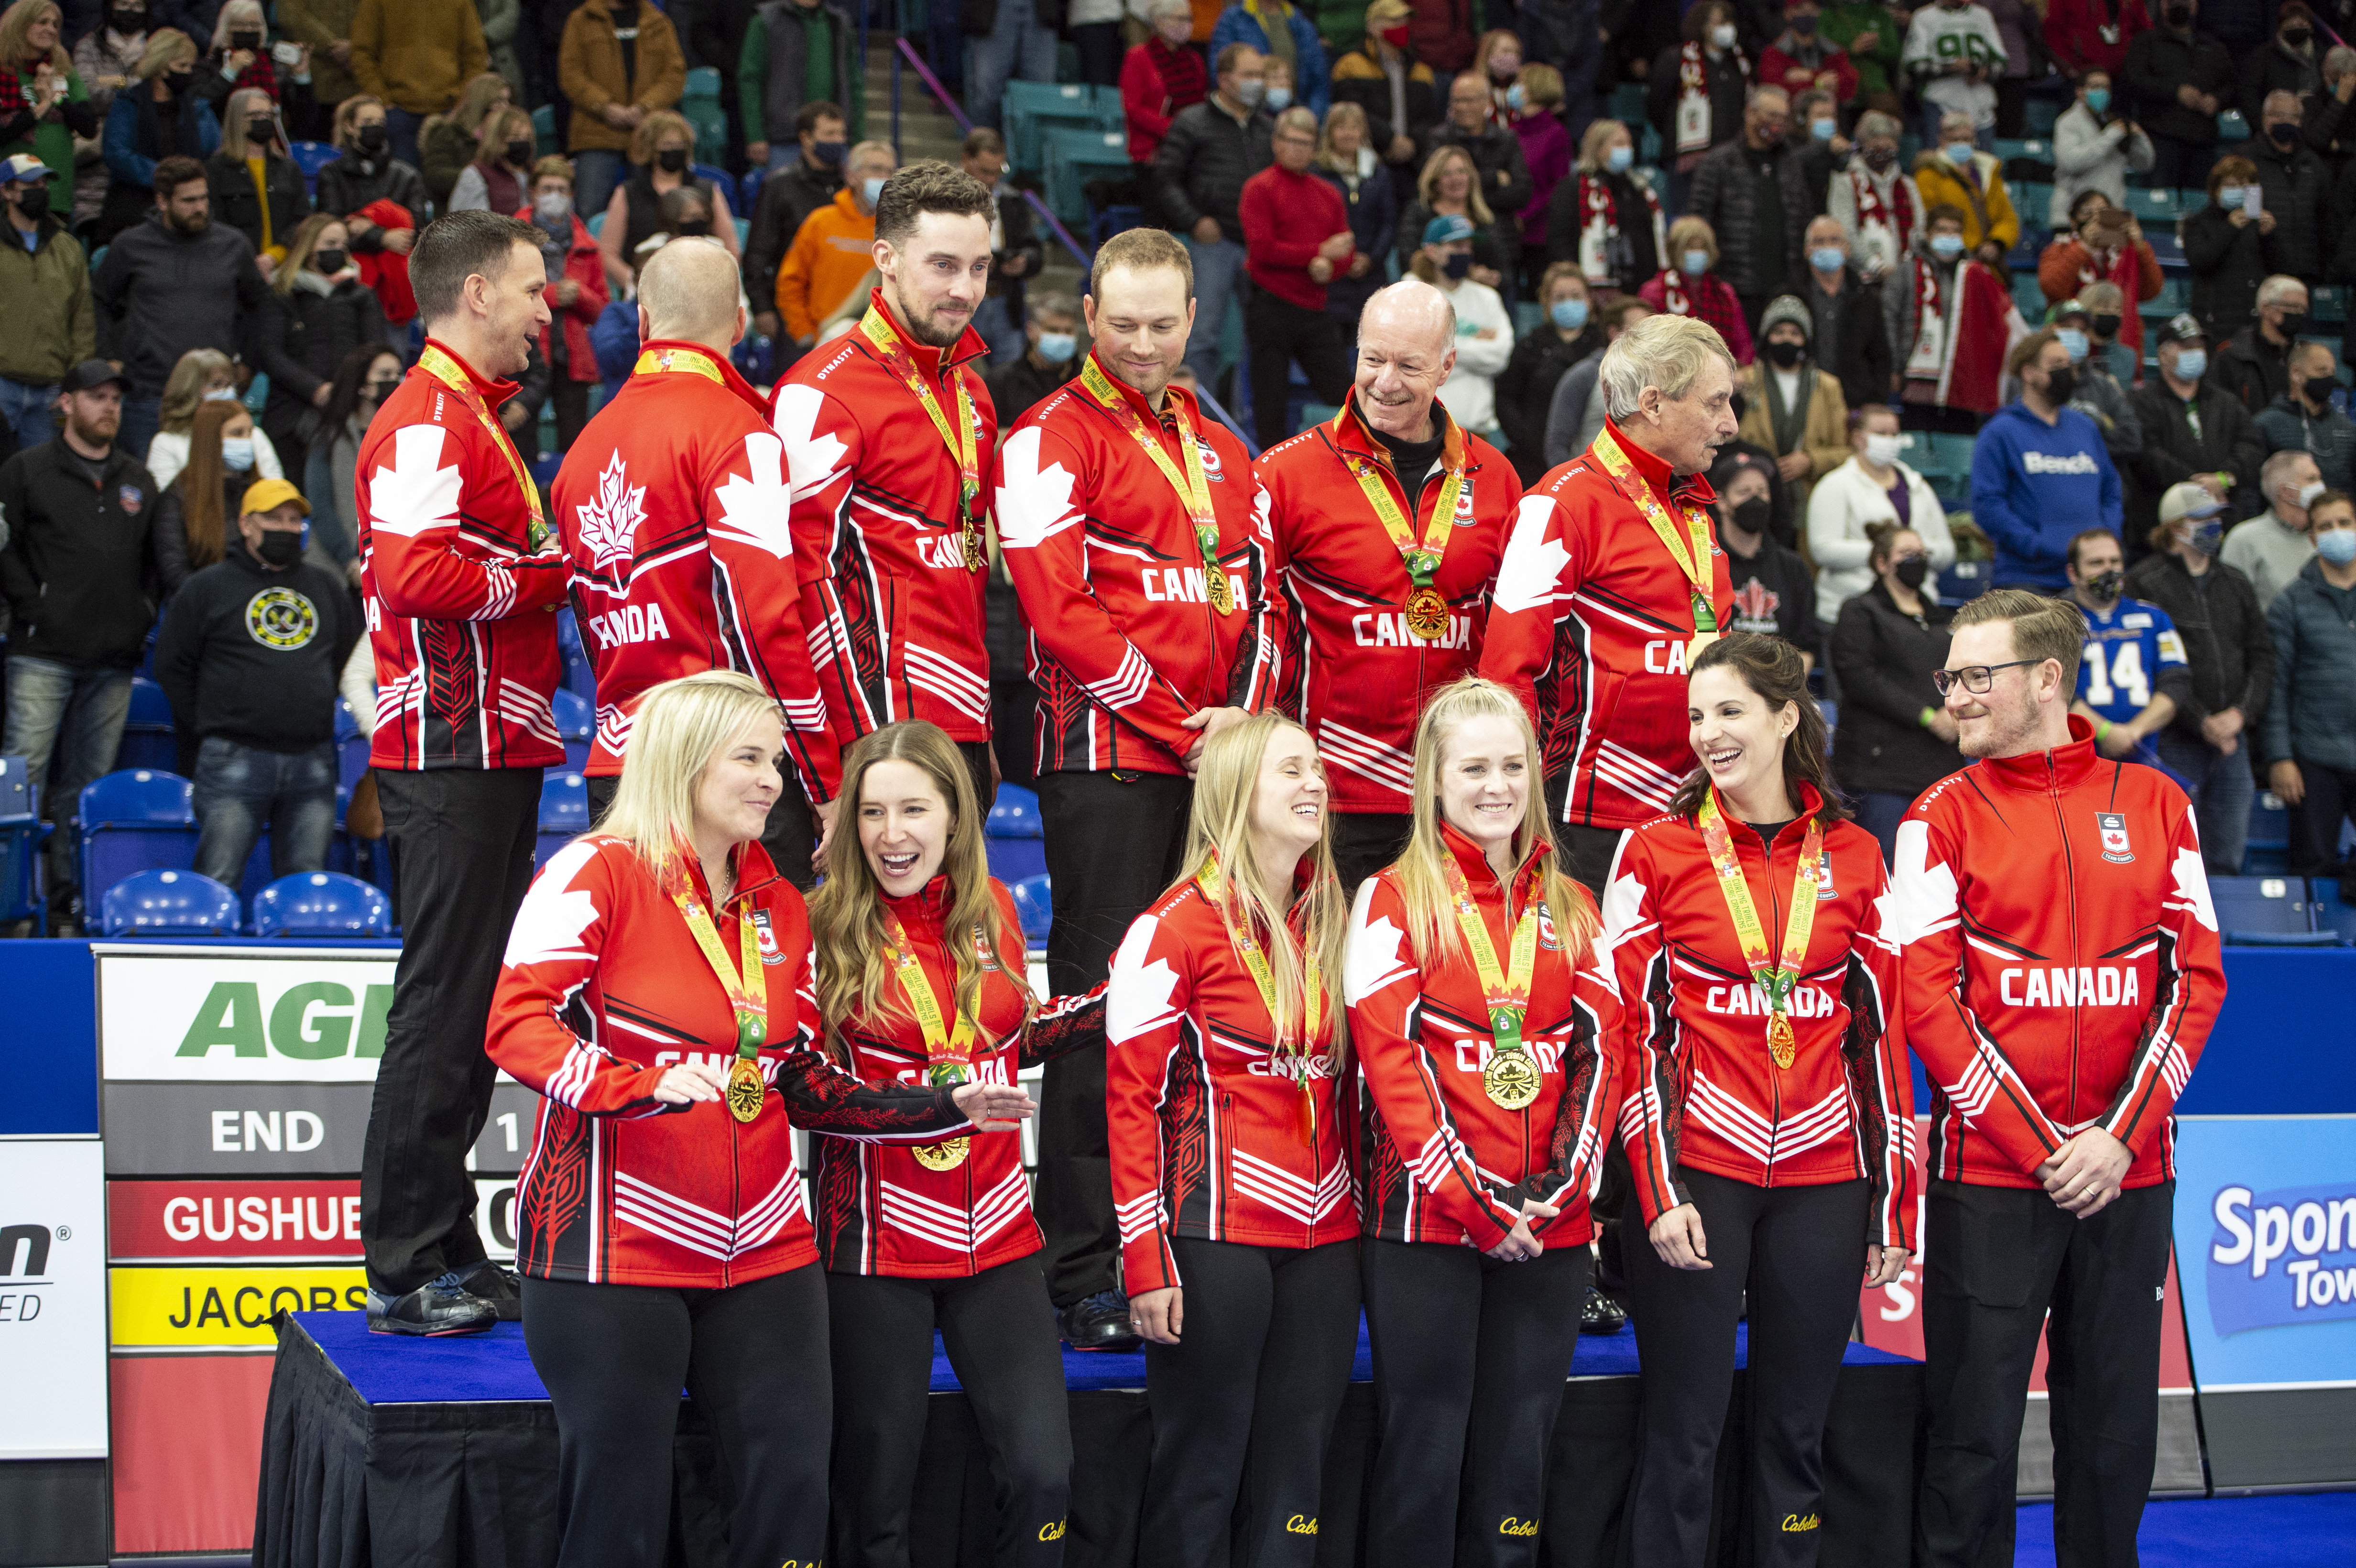 Gushue wins mens final at Canadas Olympic curling trials, Jones takes womens berth Globalnews.ca